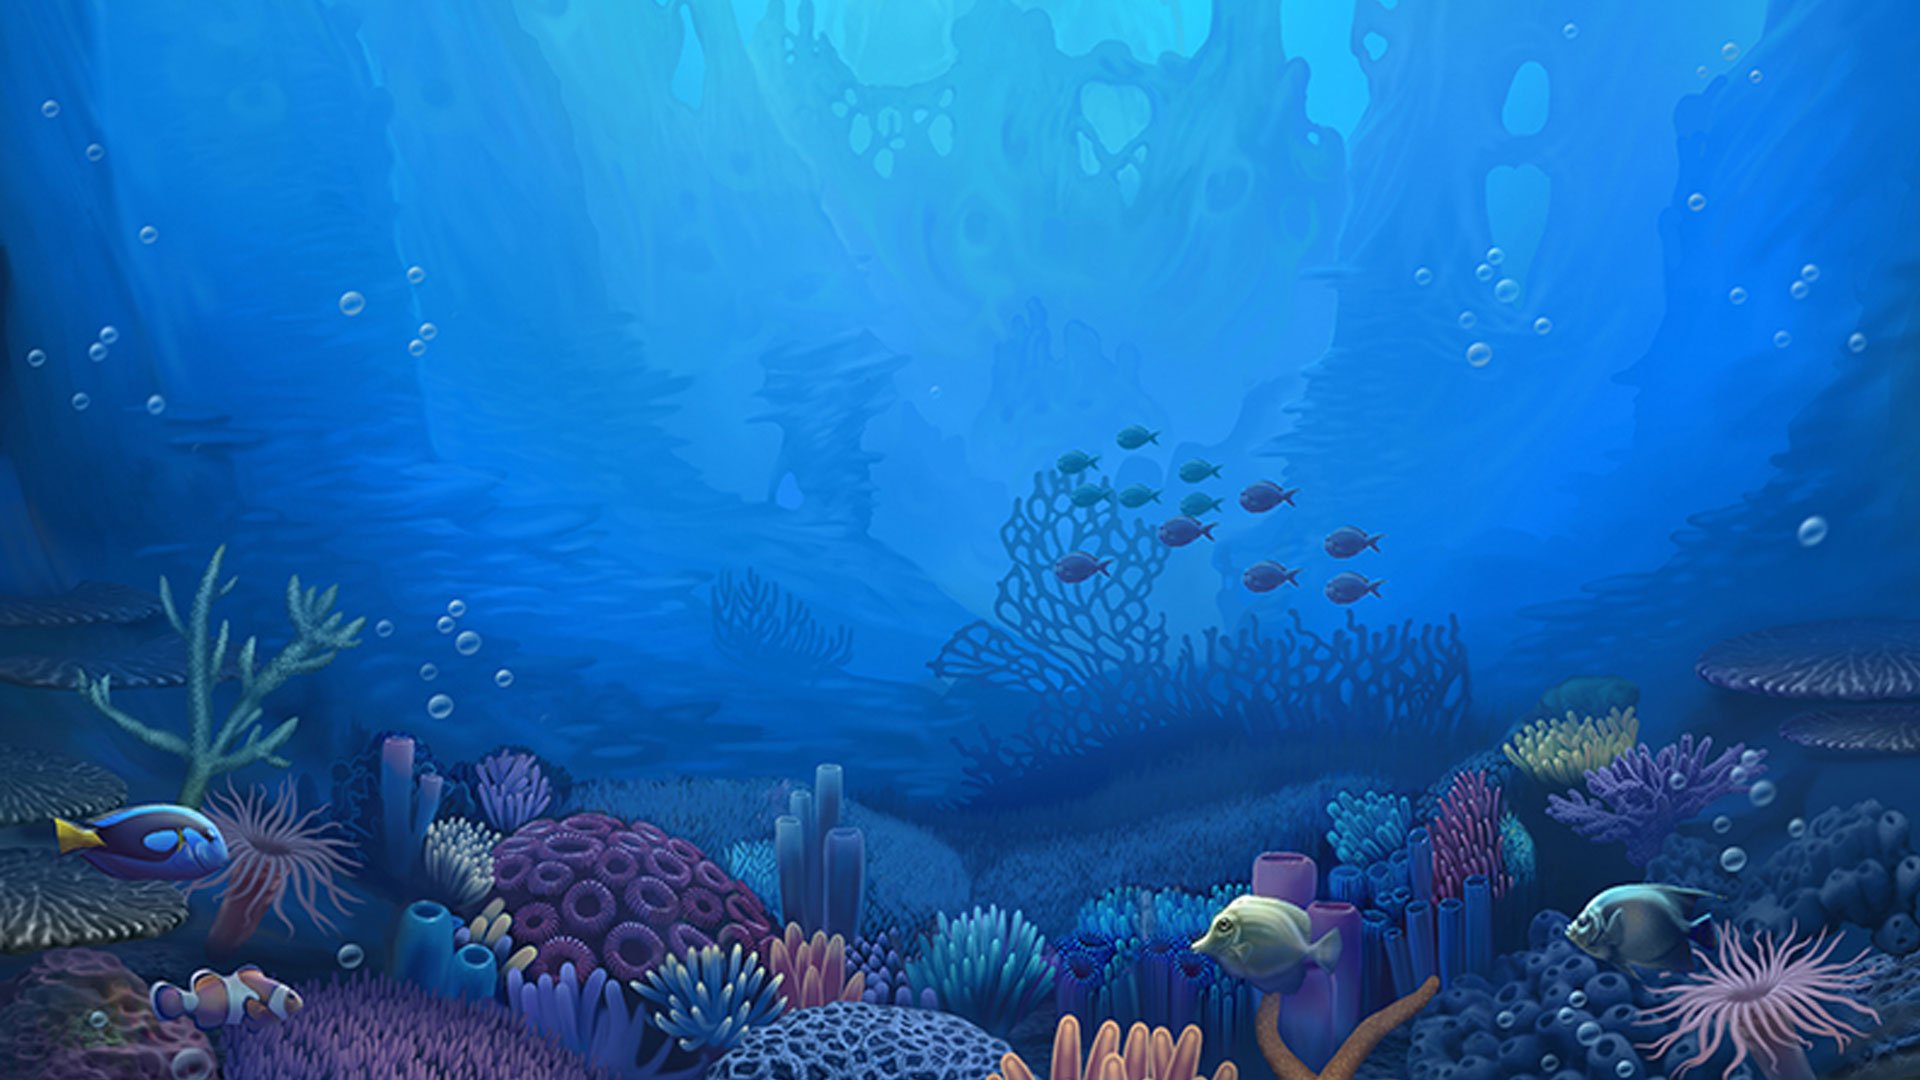 Game hight resolution background Mermaid's Diamond